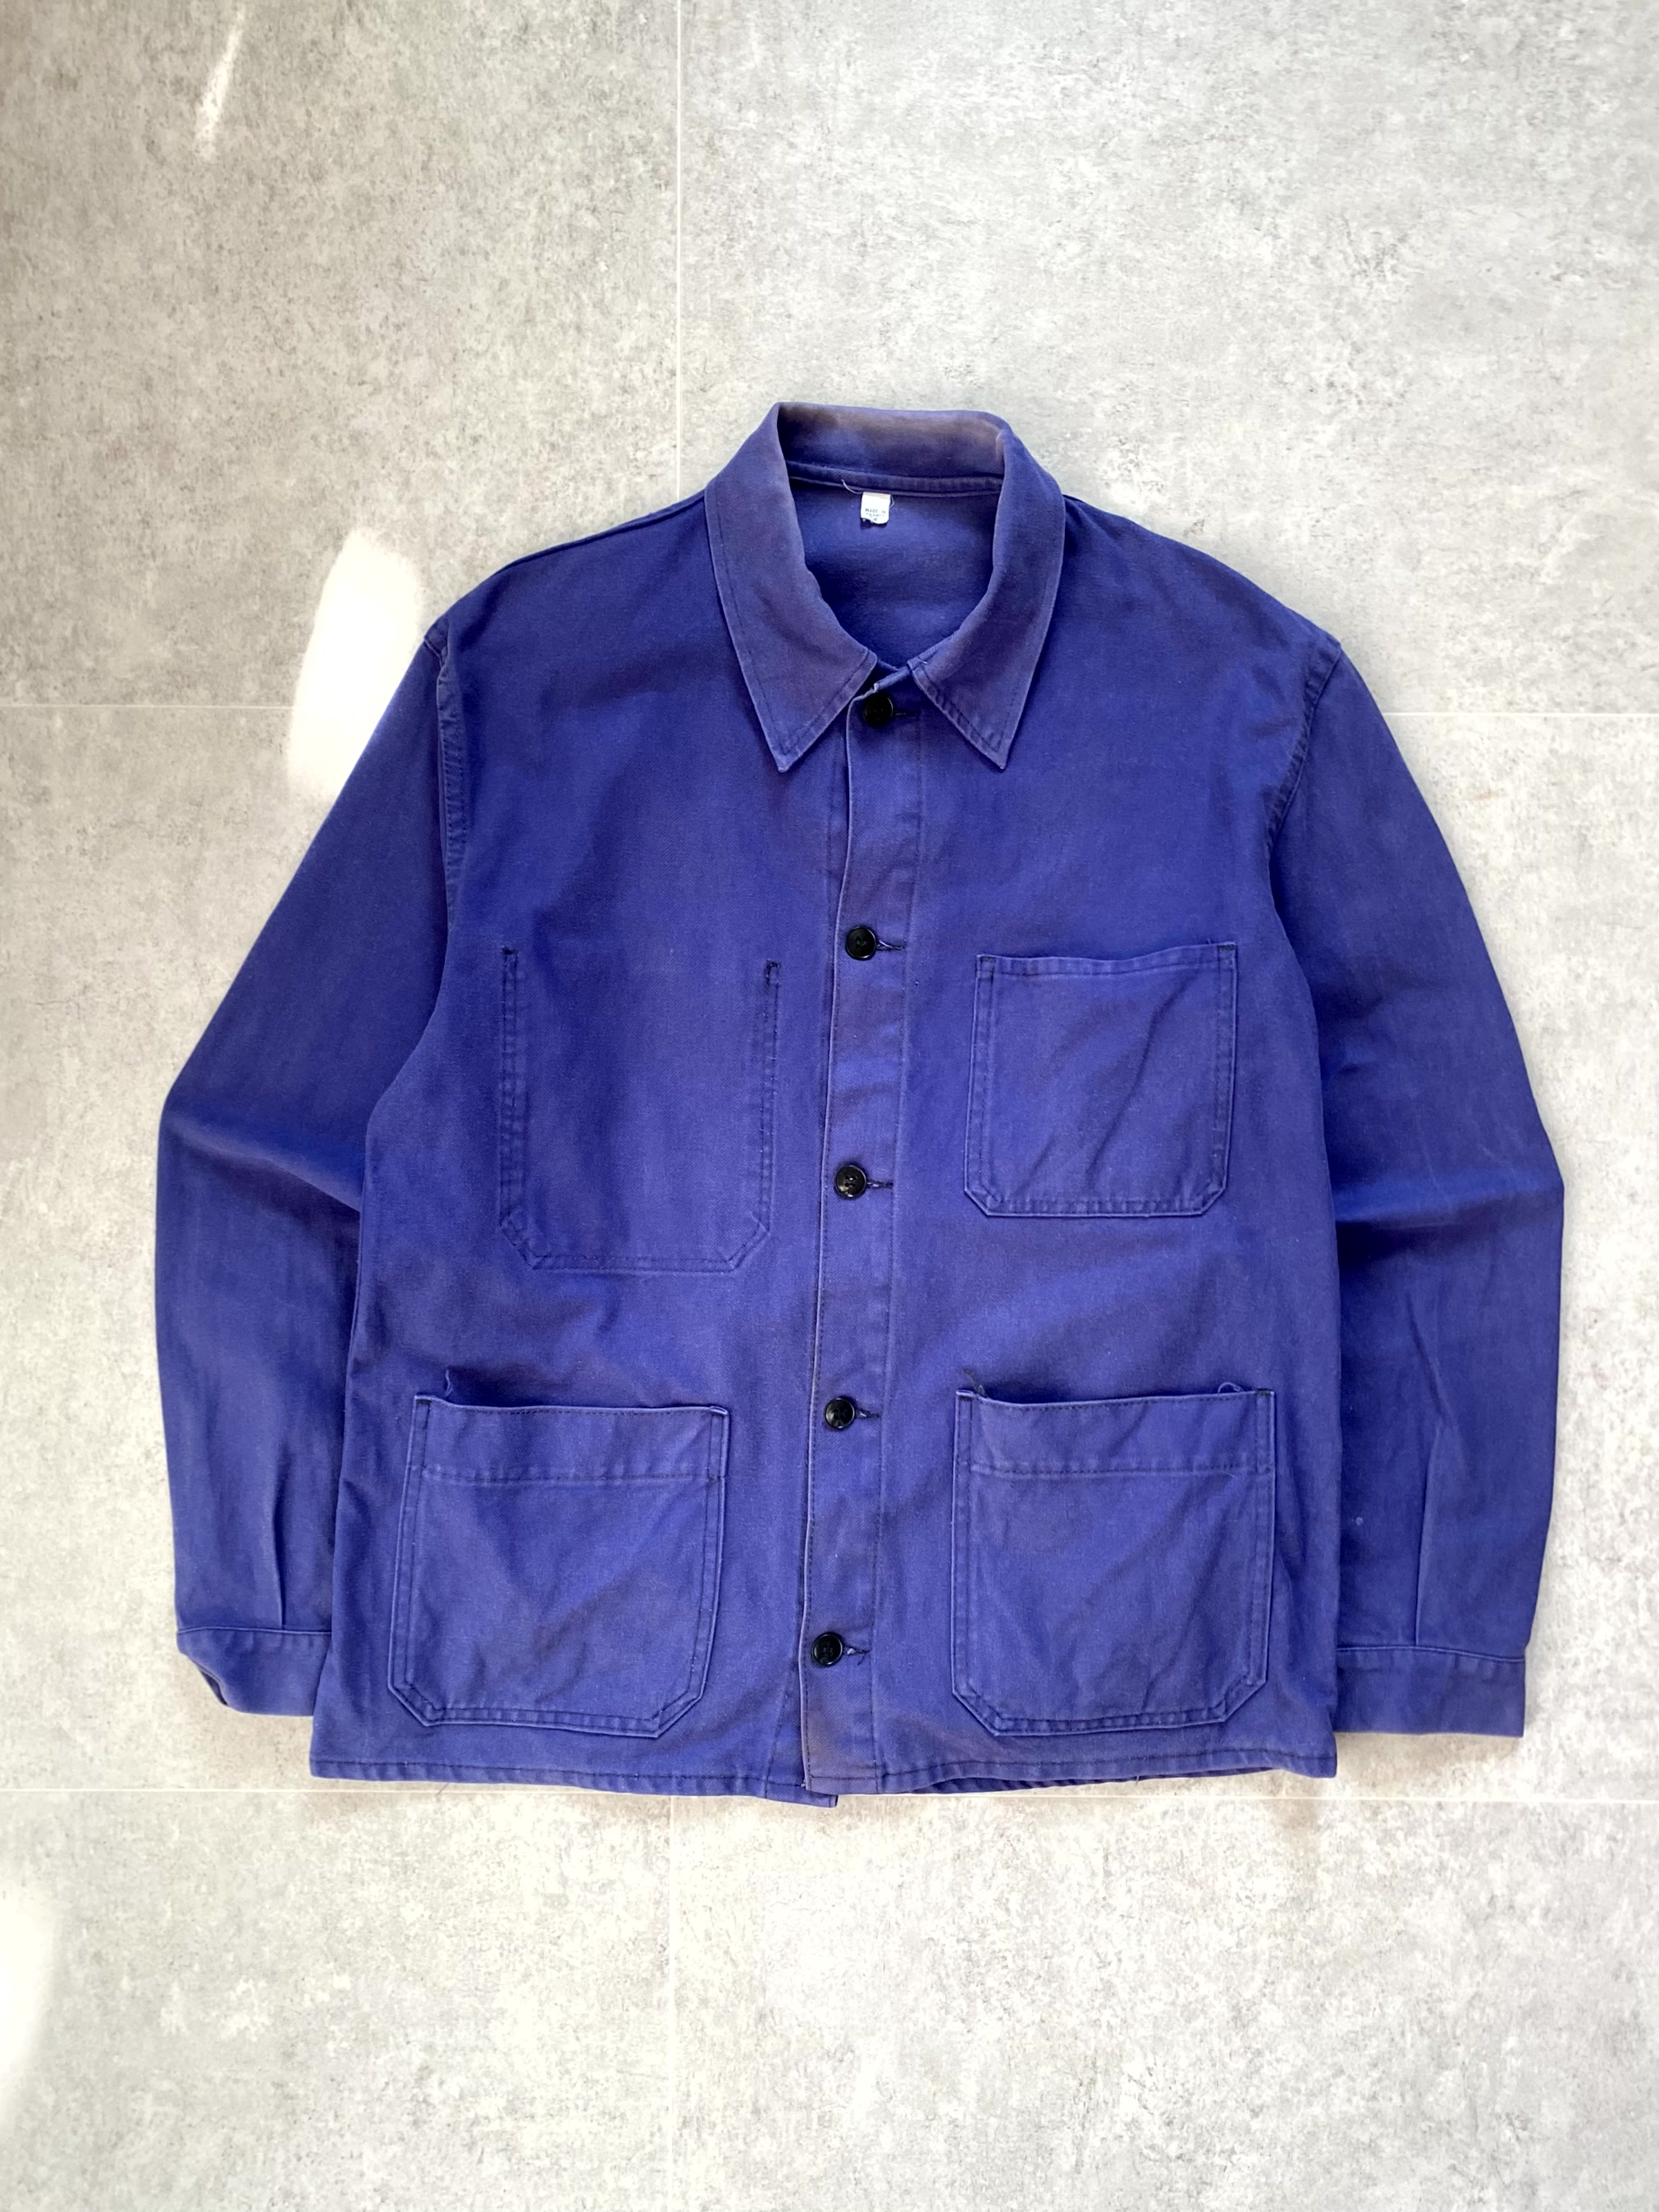 Vintage French Work Jacket 100~105 Size #7 - 체리피커